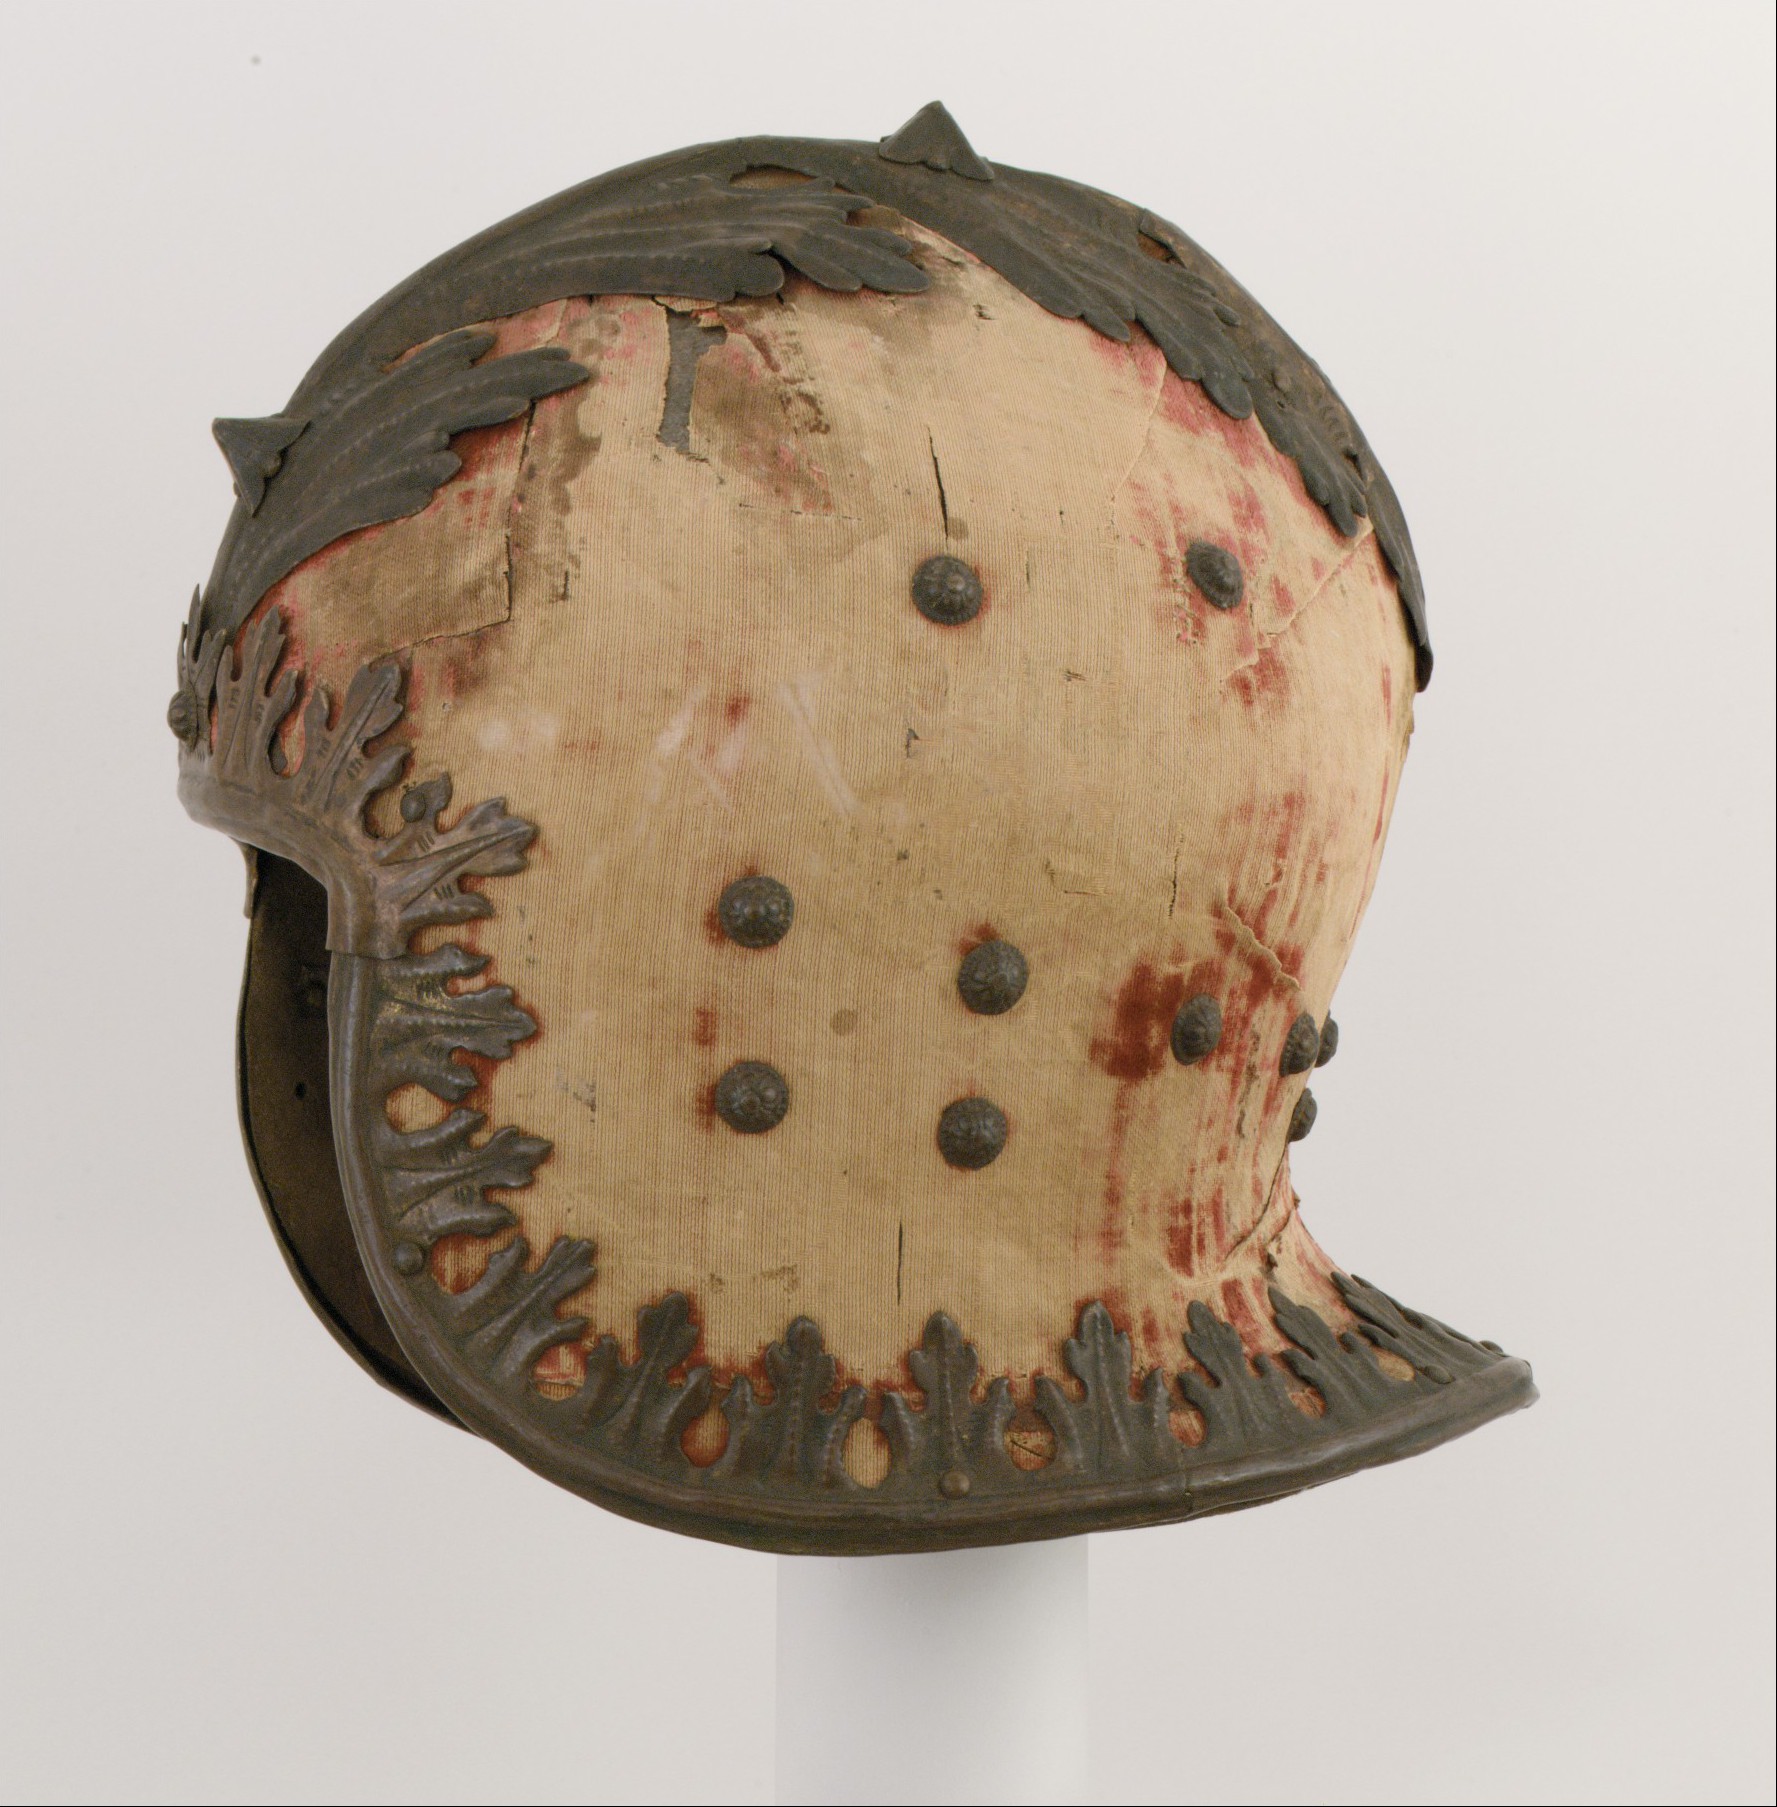 Sallet Wikipedia - roblox what helmet looks like a sallet